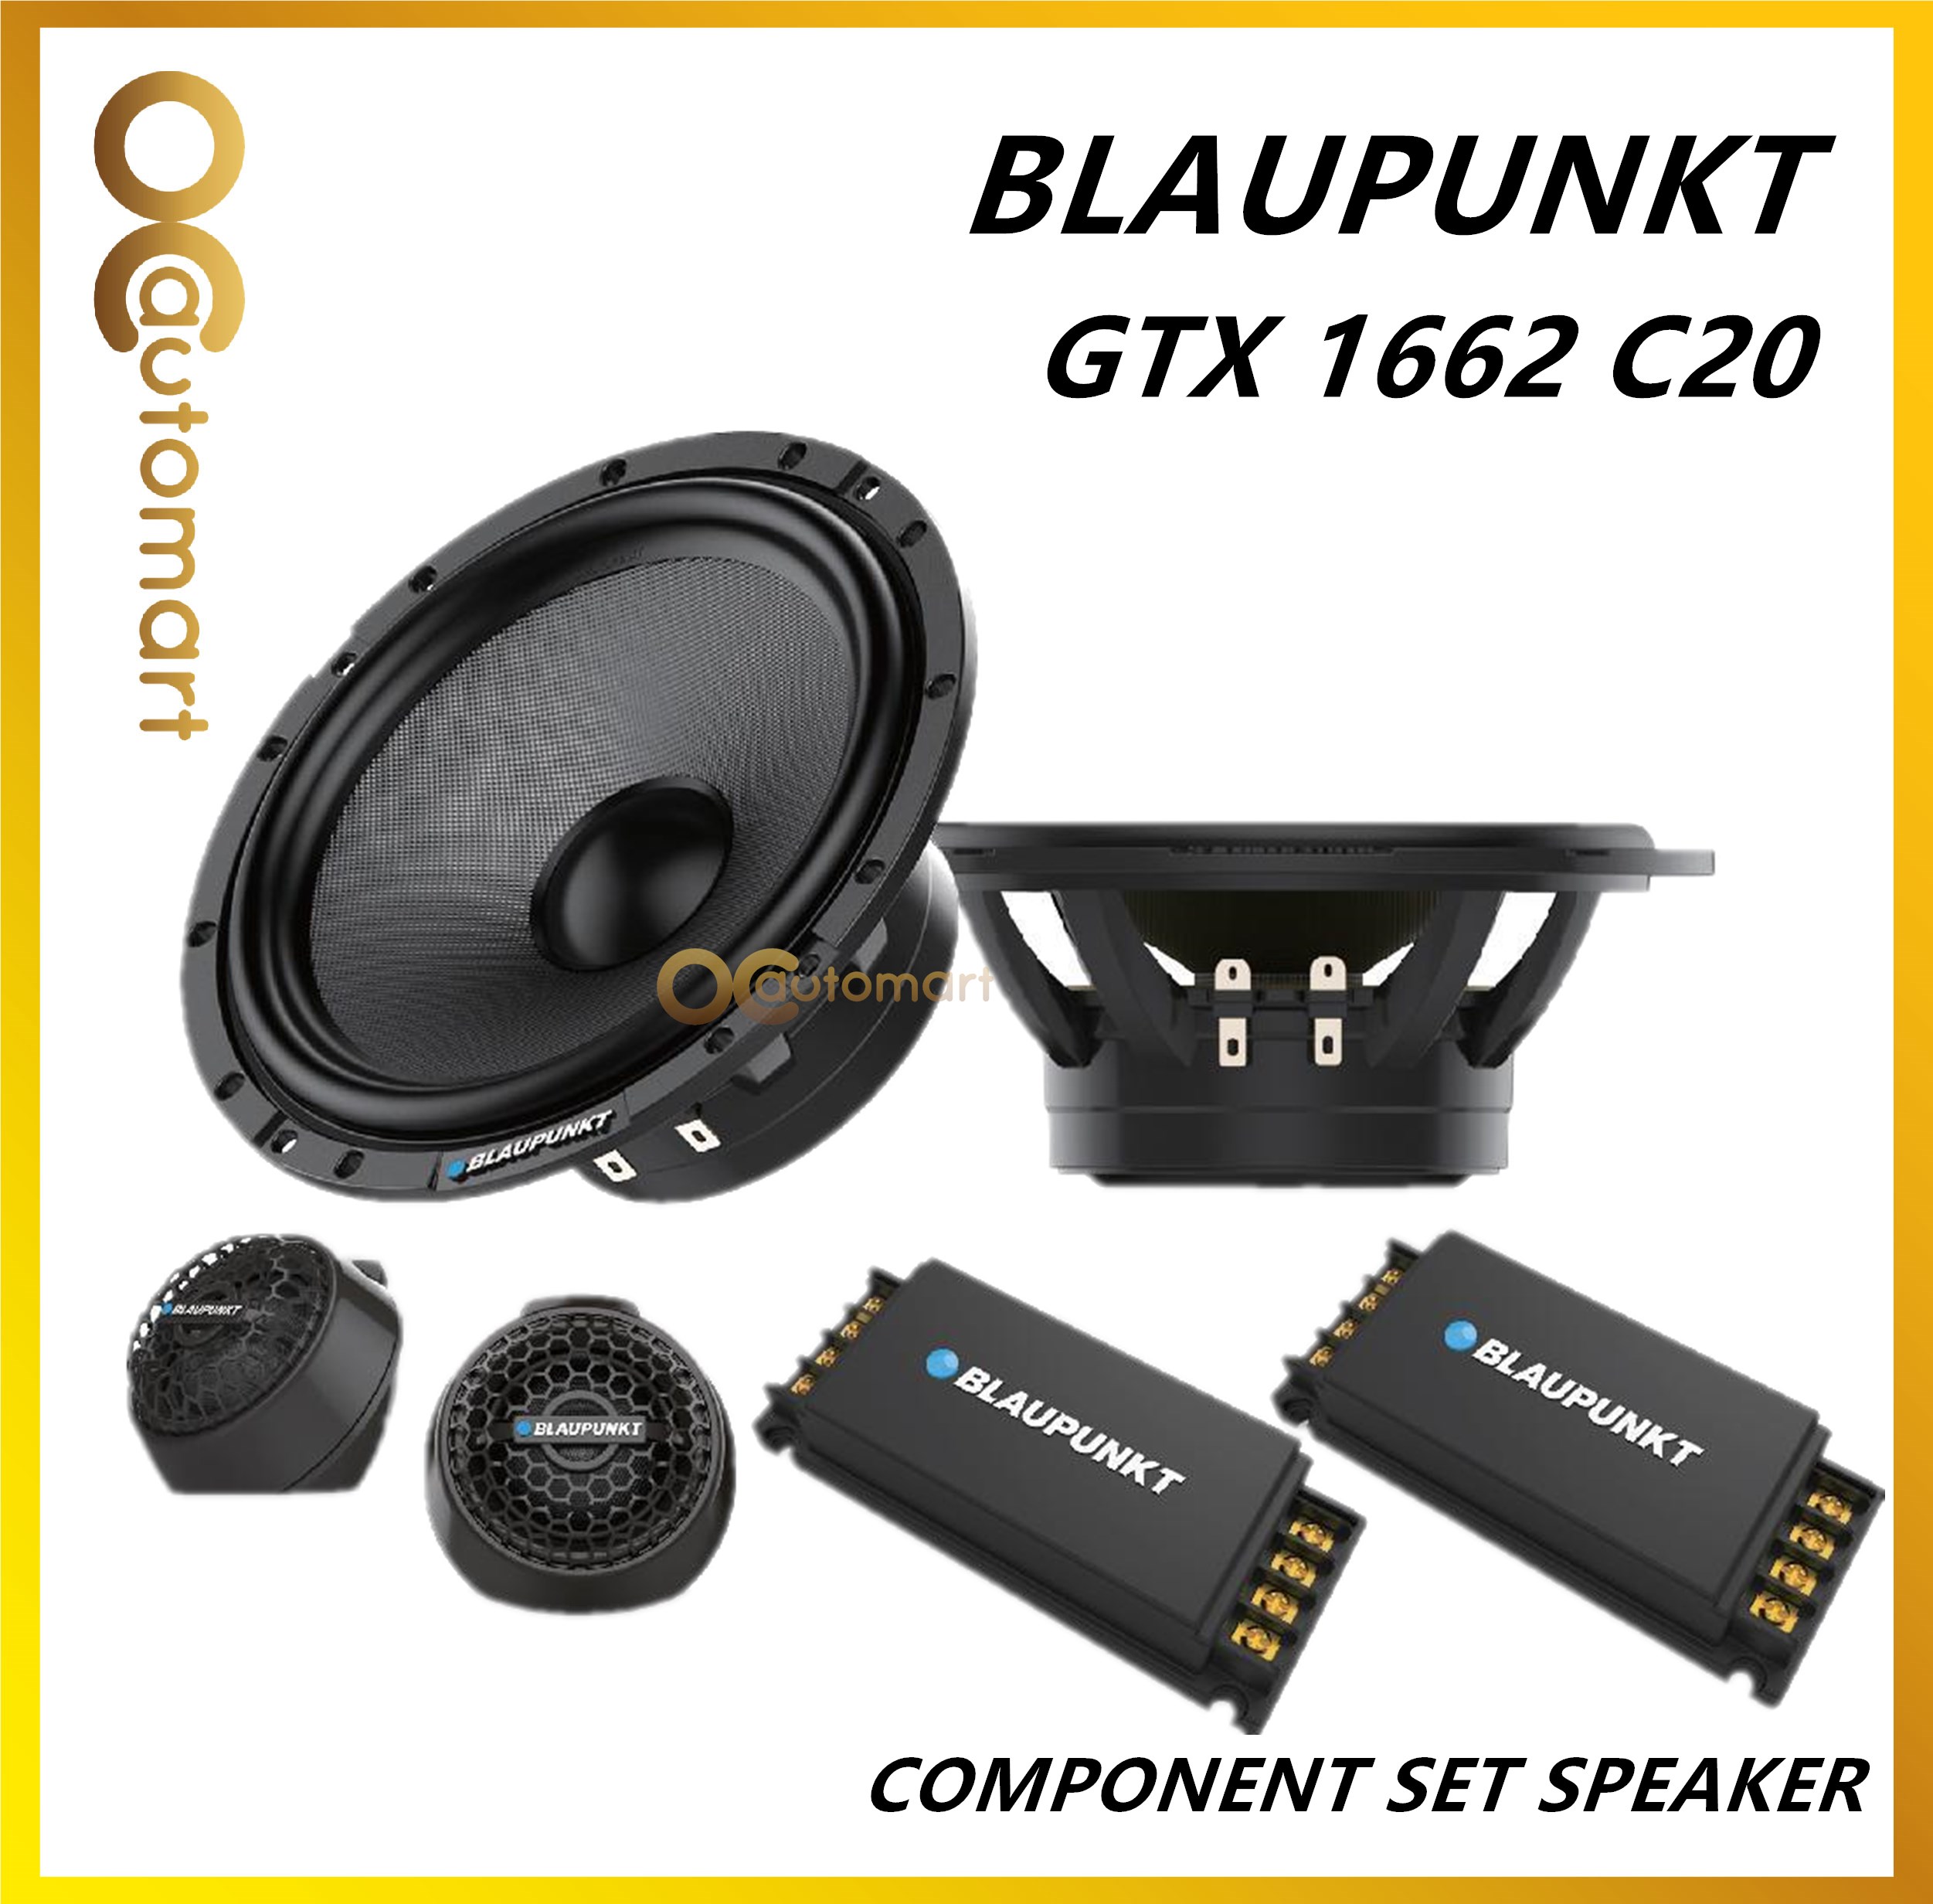 Blaupunkt 6.5" 2 Way Component Set Speaker  30 watts RMS GTX 1662 C20